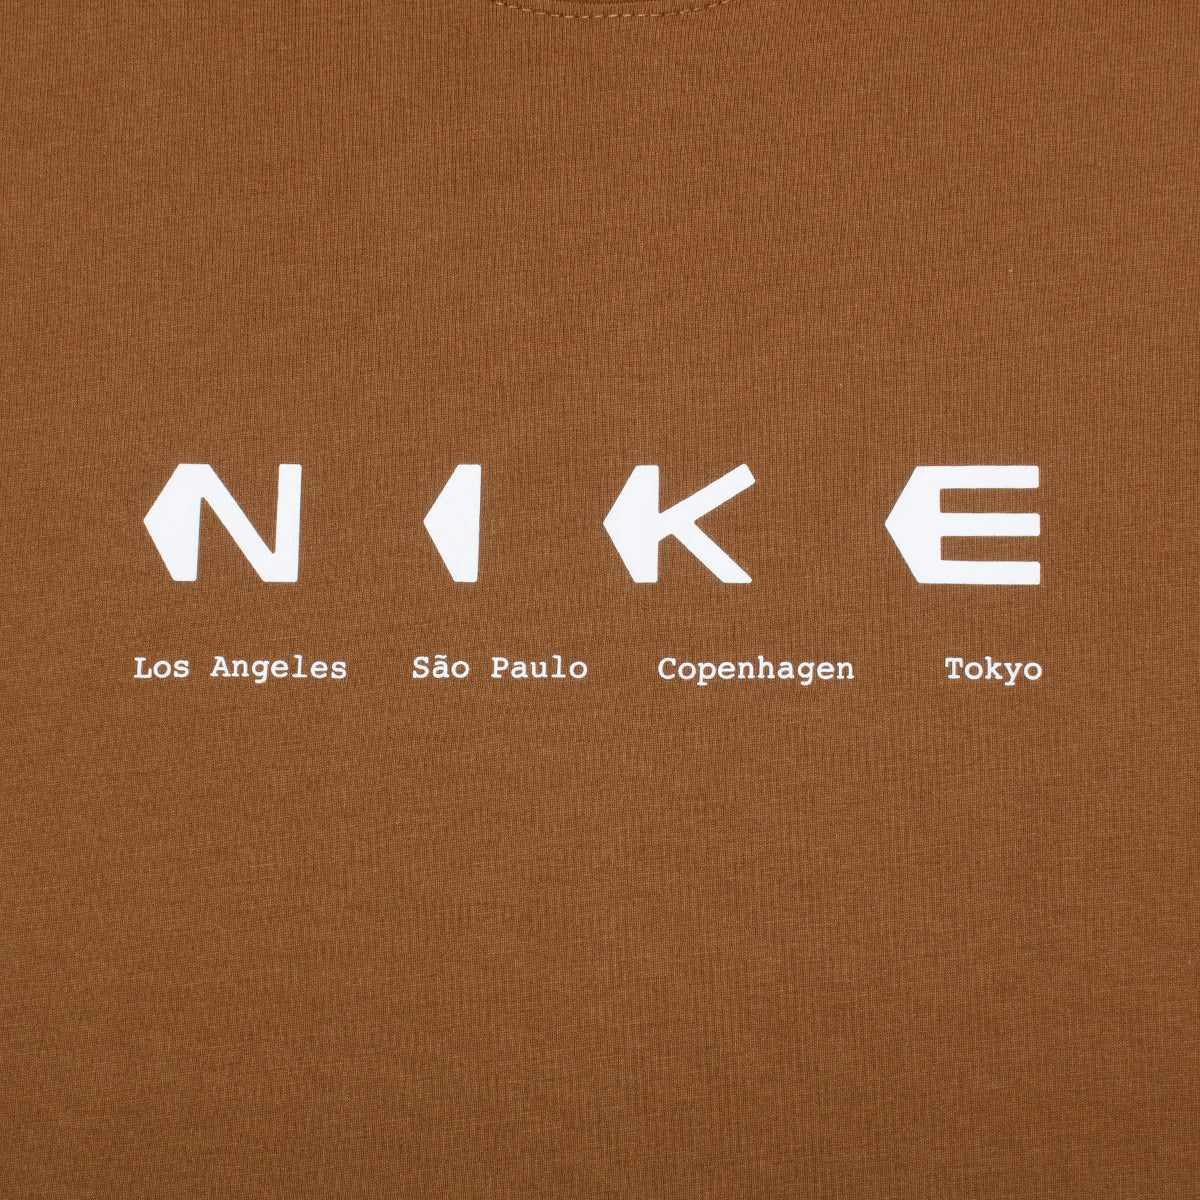 Nike SB City Info T-Shirt Style # DX9464-270 Color : Ale Brown